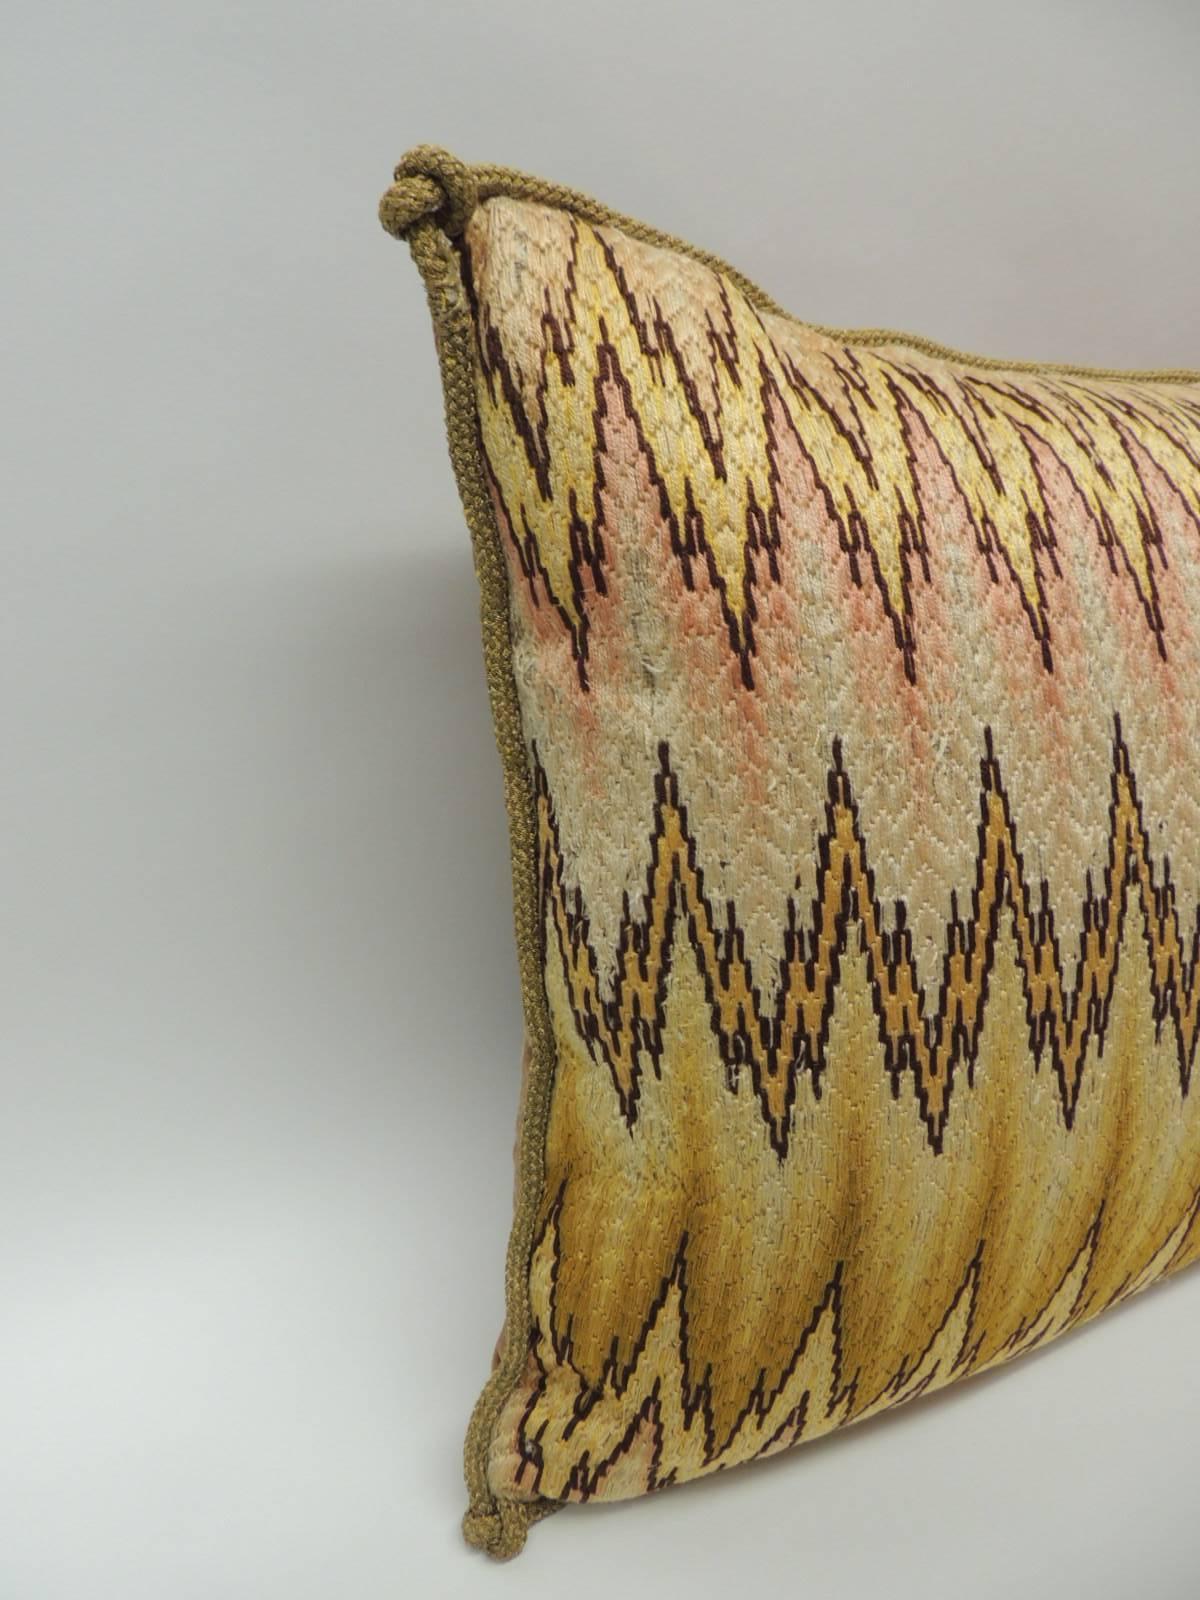 Hand-Woven 19th Century Italian Bargello Embroidery Bolster Decorative Pillow